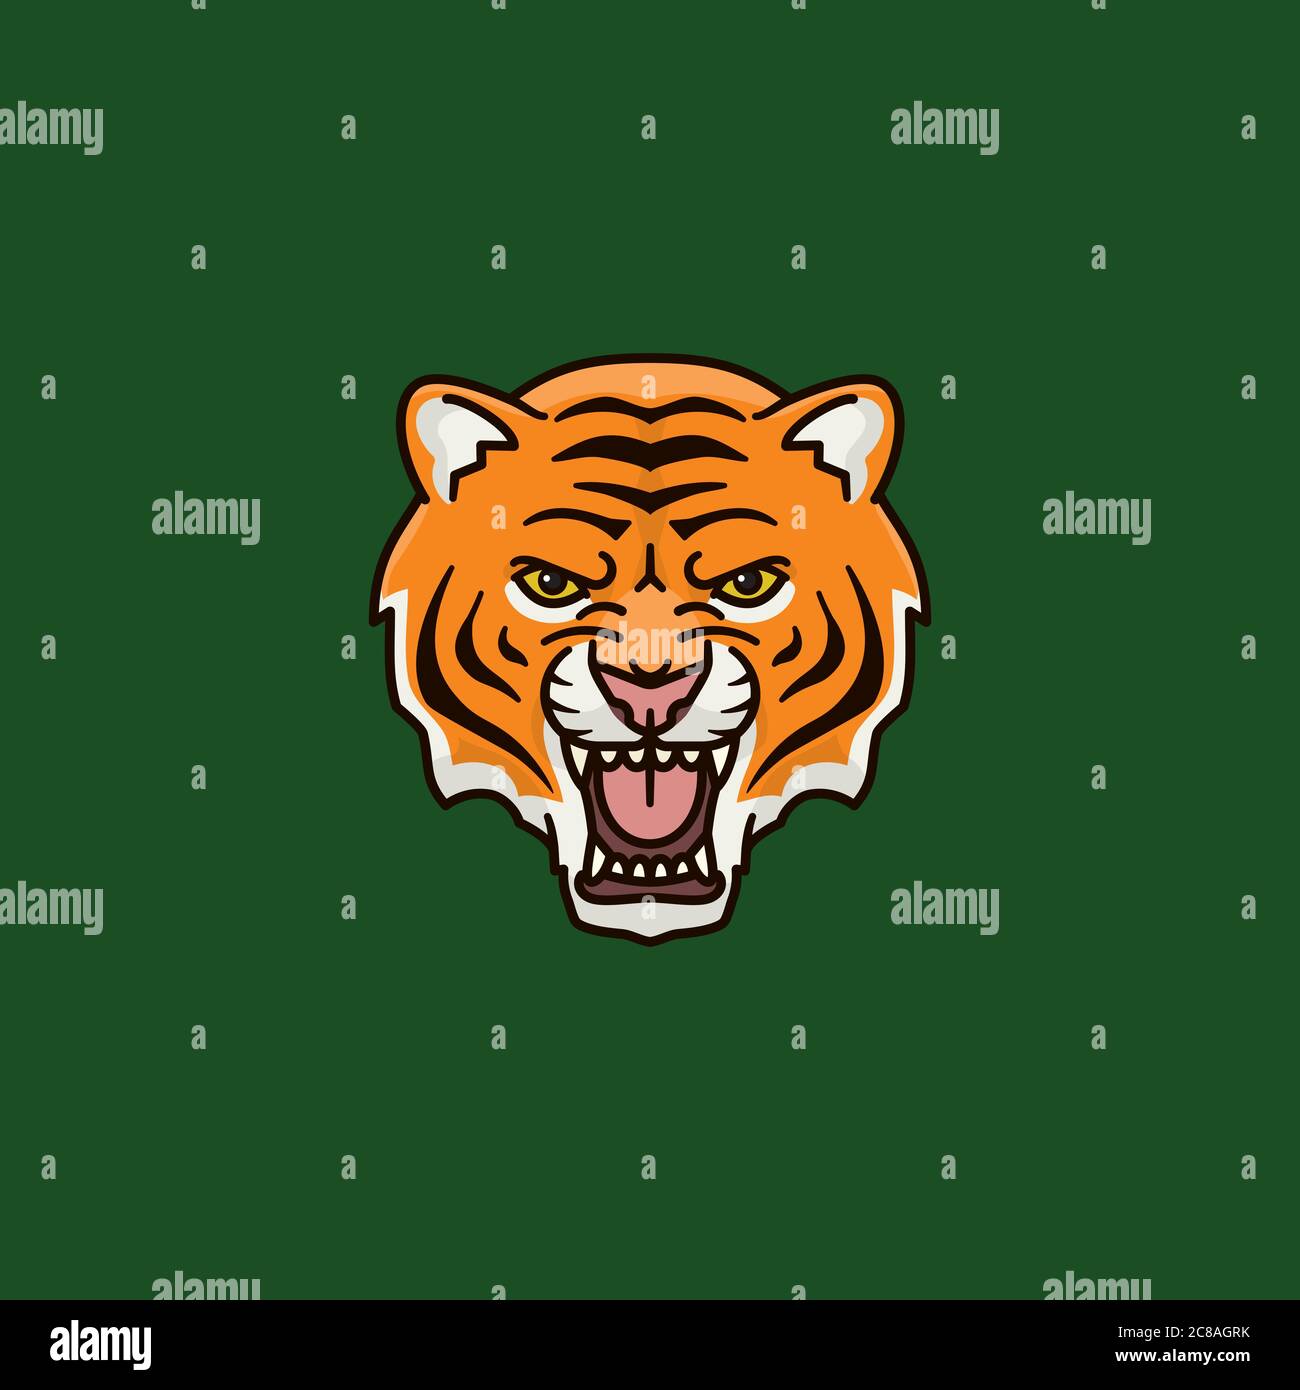 Roaring tiger face vector illustration for International Tiger Day on July 29. Stock Vector